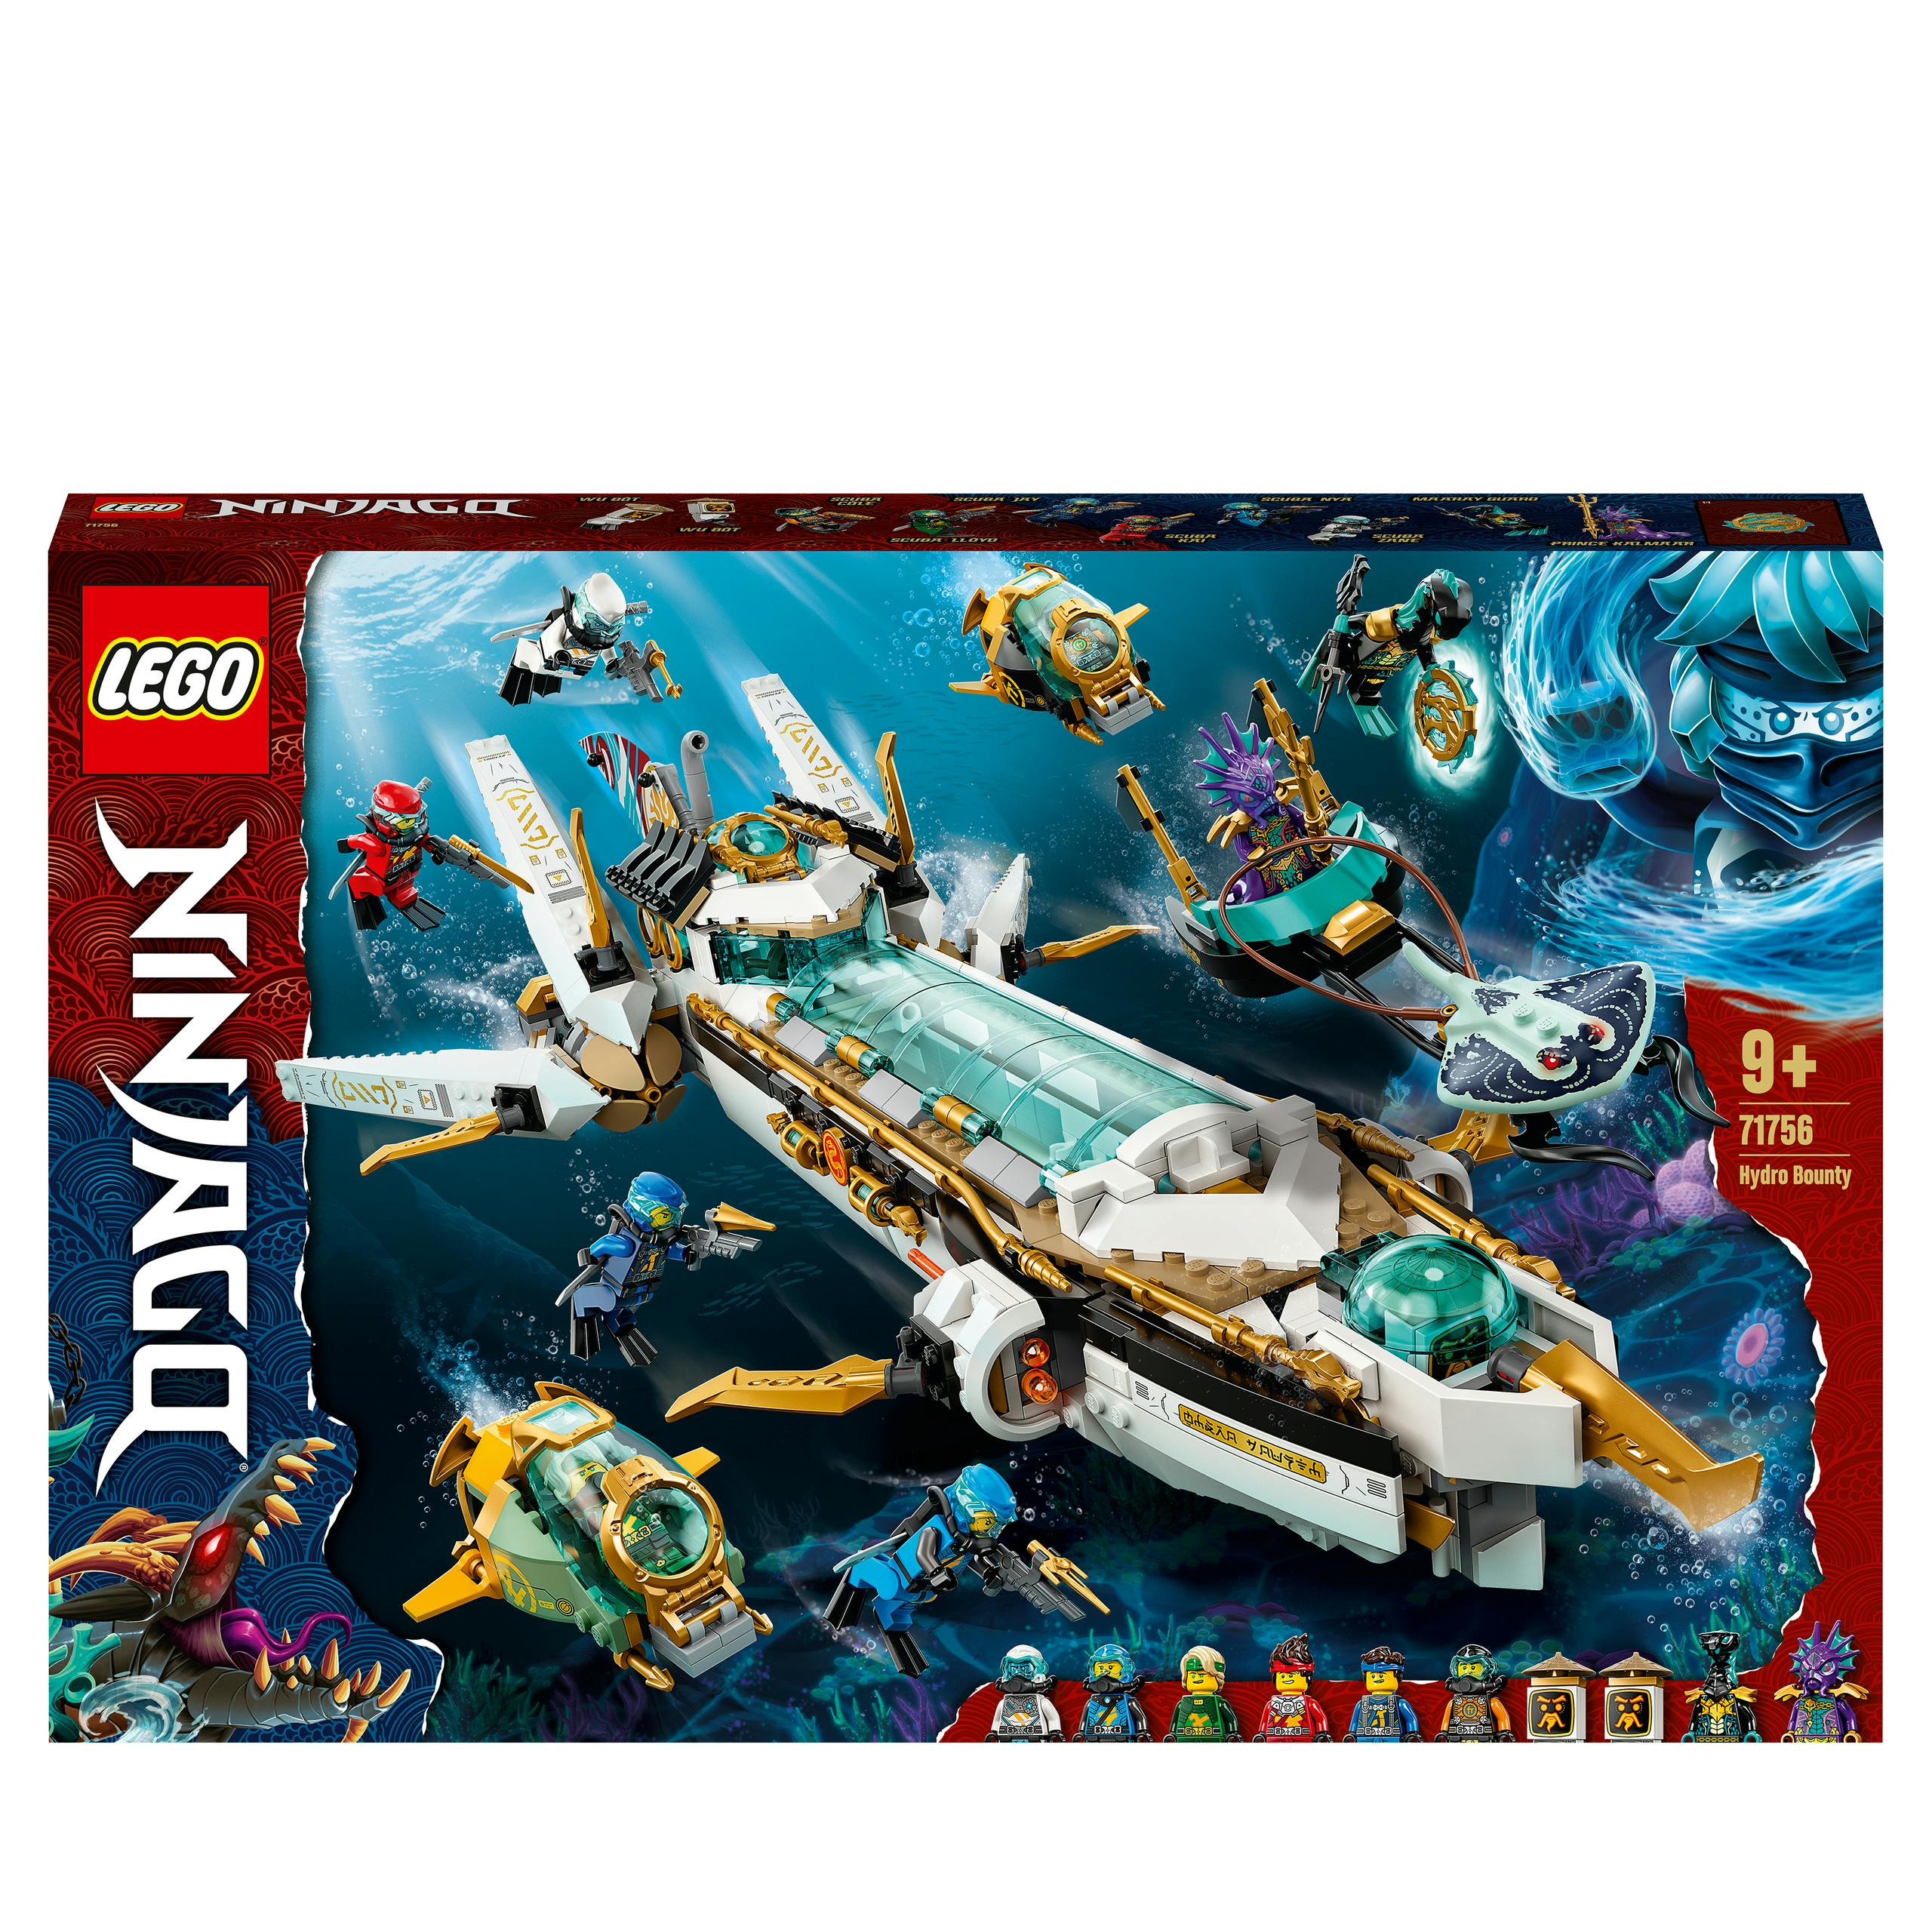 LEGO NINJAGO Hydro Bounty (71756)